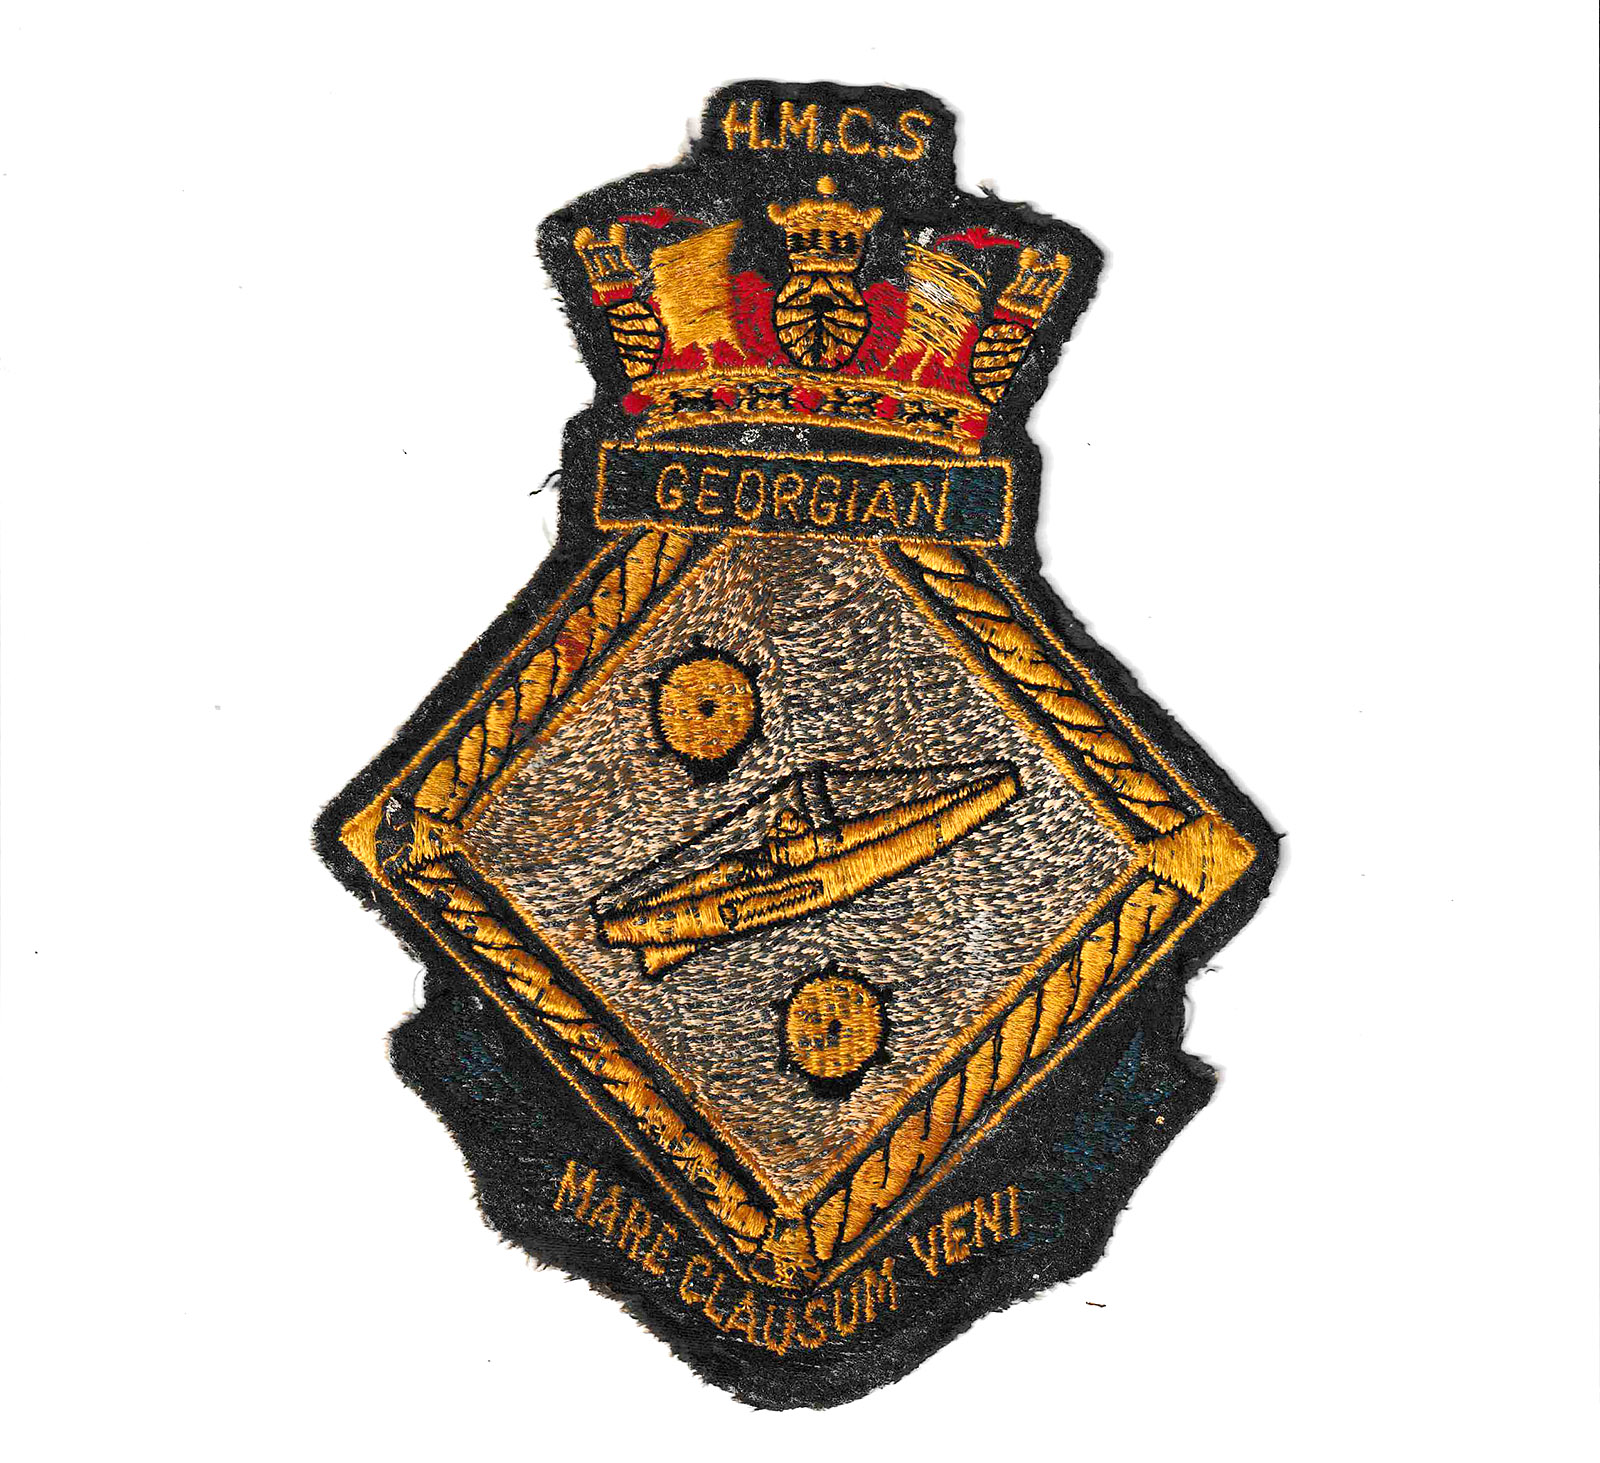 The blazer crest worn by crewmembers of HMCS Georgian.